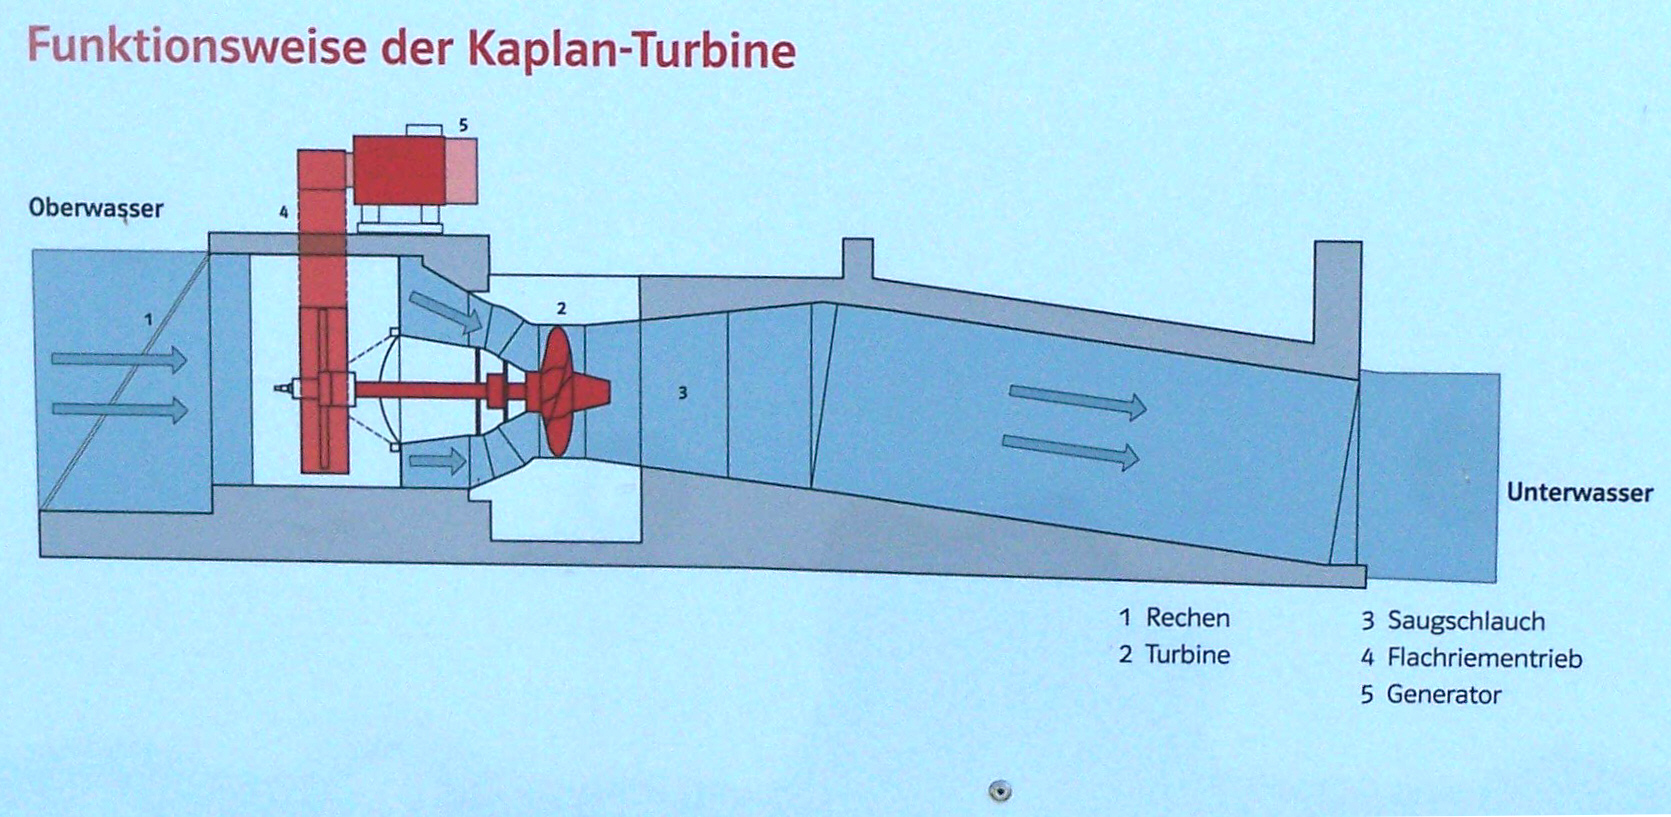 Turbine | Definition, Types, & Facts | Britannica